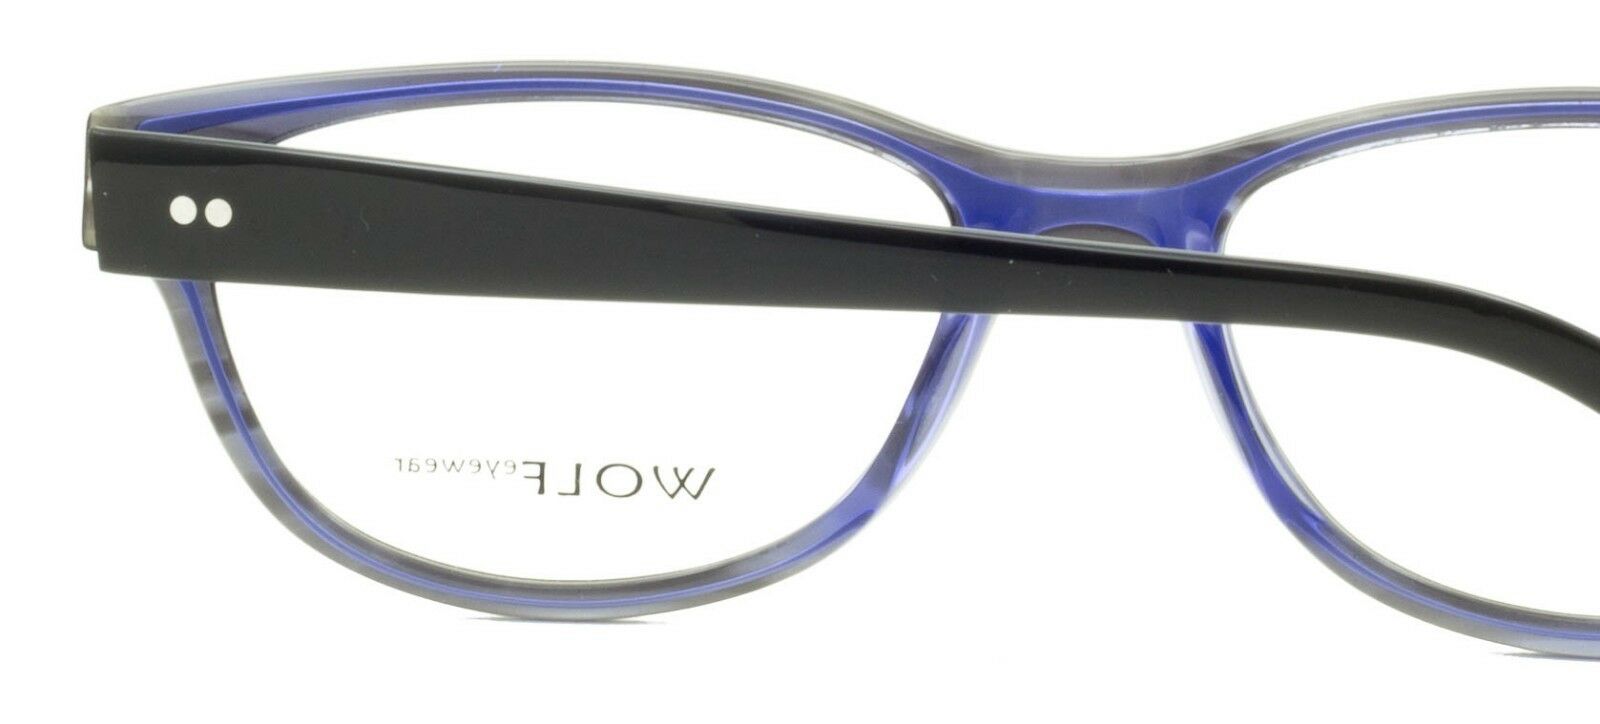 WOLF EYEWEAR 3001 C12 FRAMES RX Optical Glasses Eyeglasses Eyewear New -TRUSTED